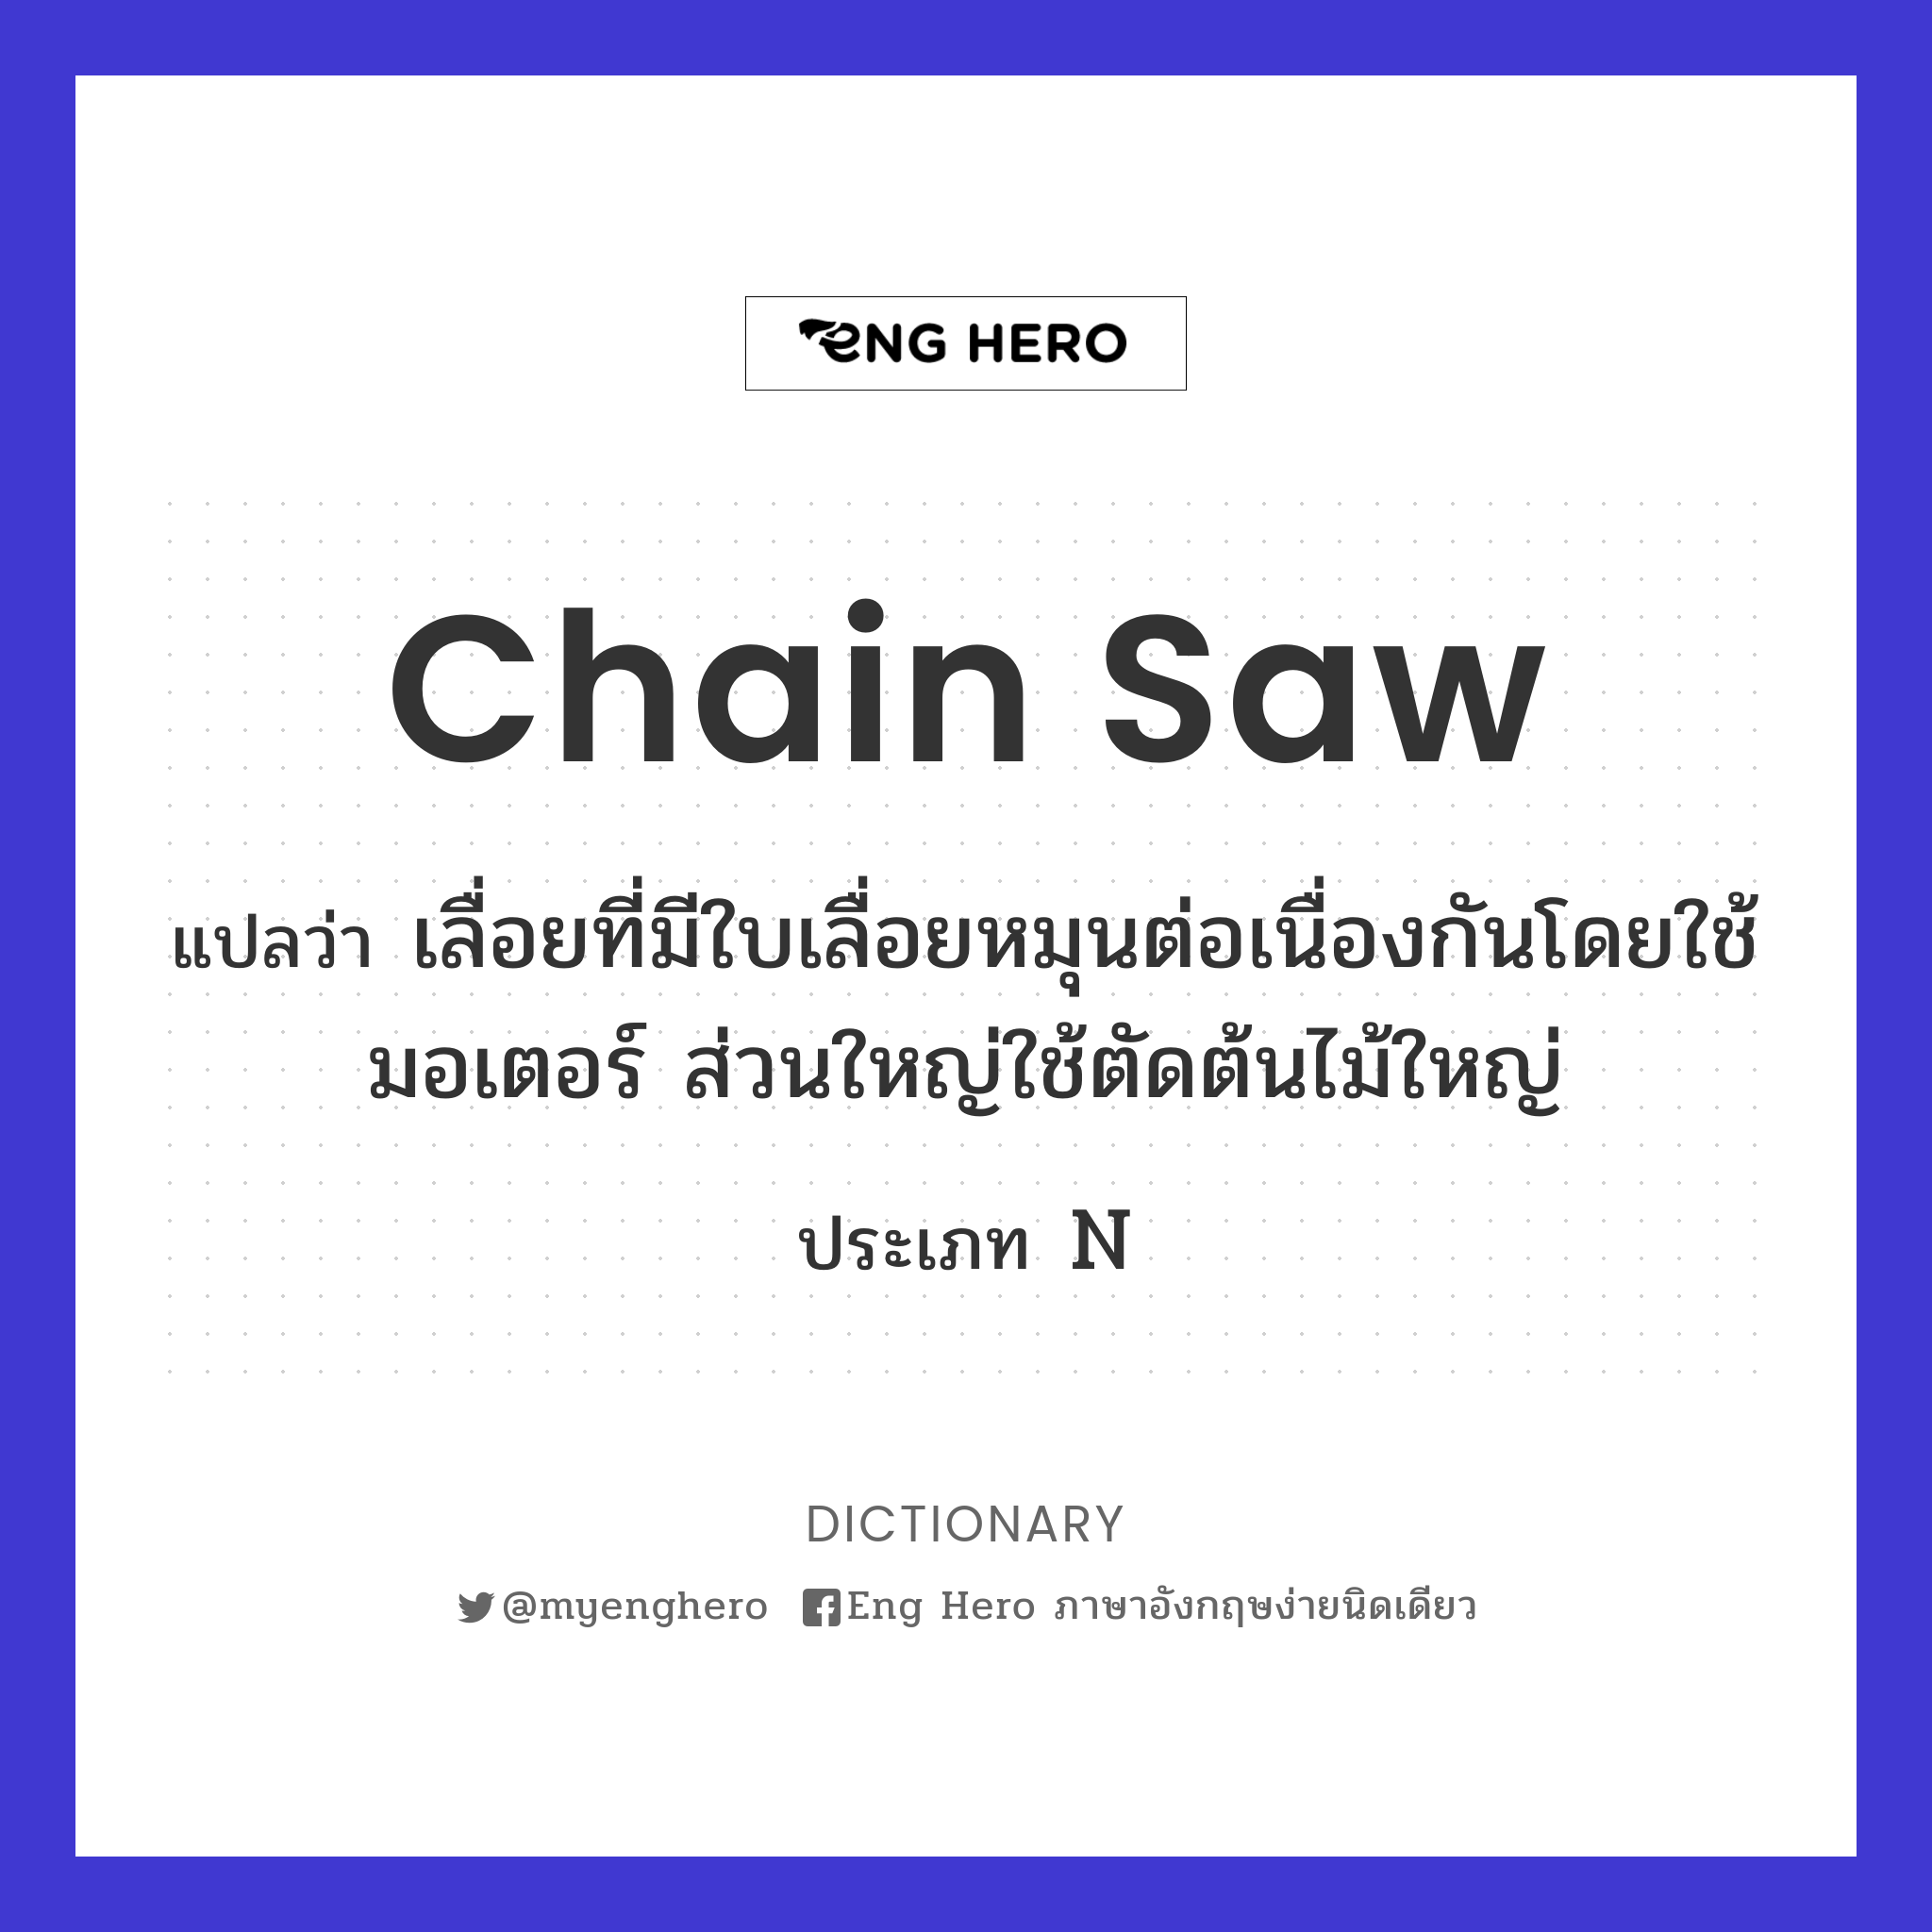 chain saw